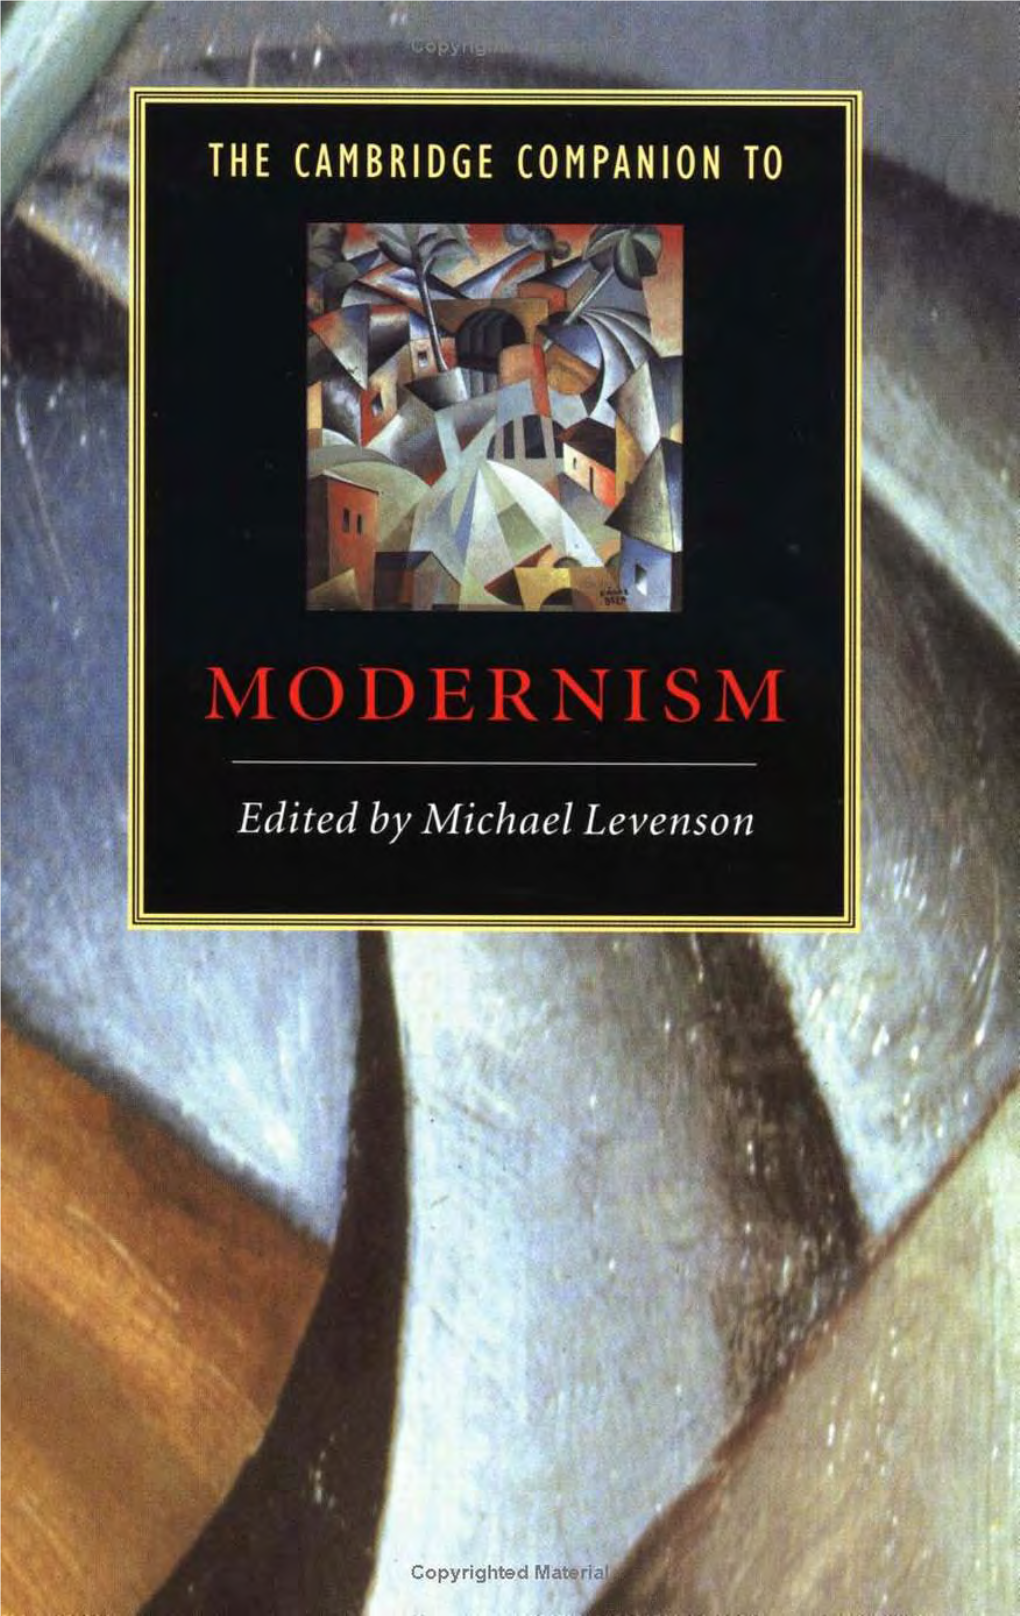 Wood, Michael. "Modernism and Film."